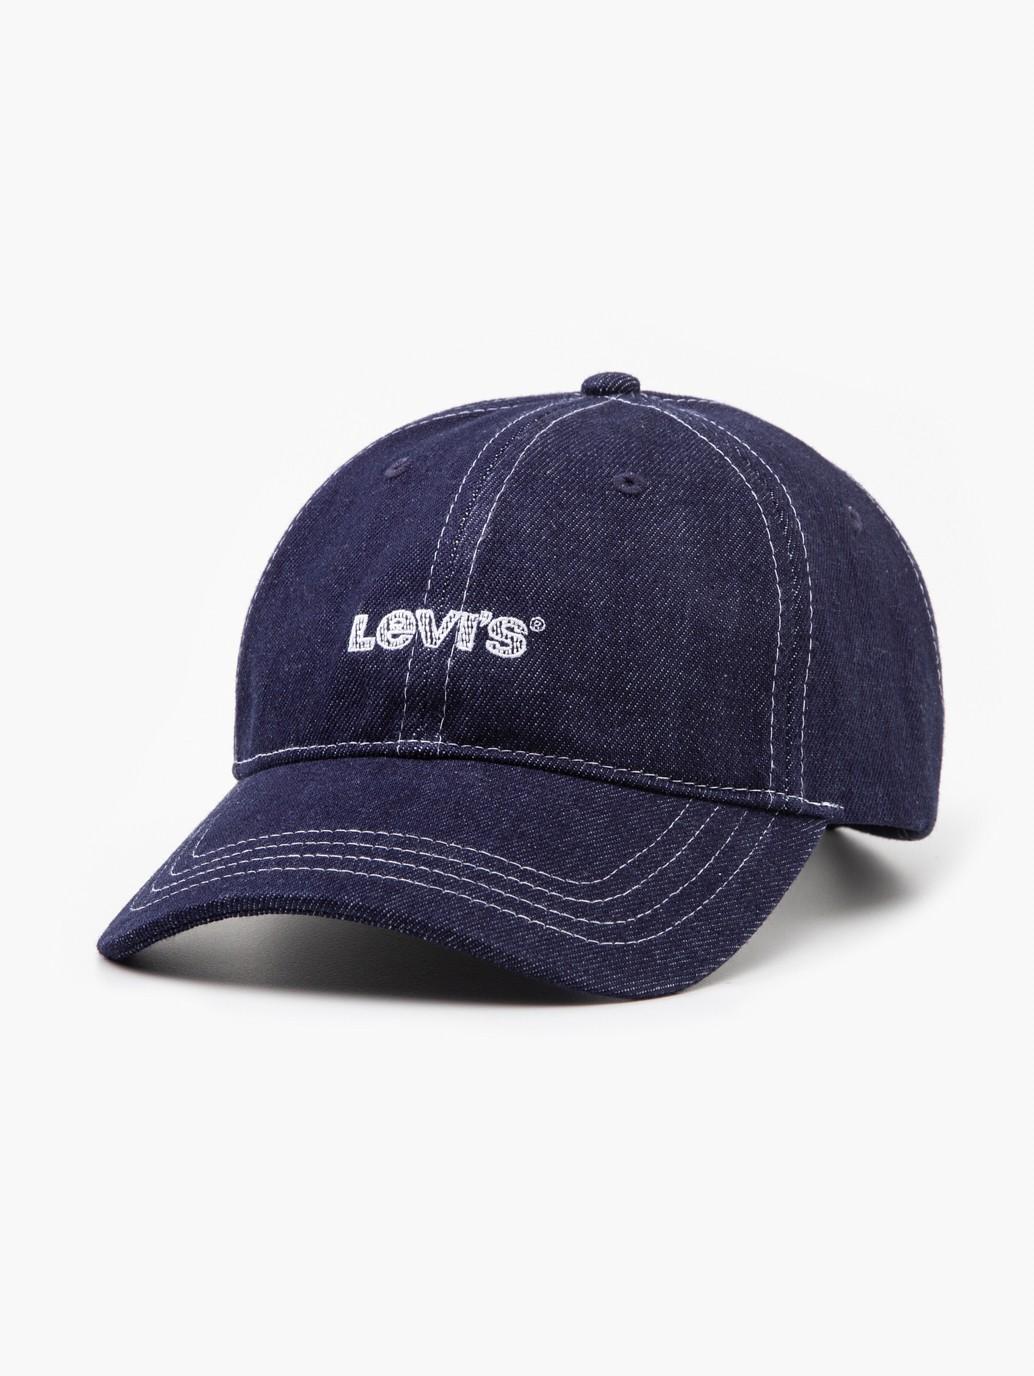 Buy Levis® Mens Denim Baseball Cap Levis® Official Online Store Sg 2745